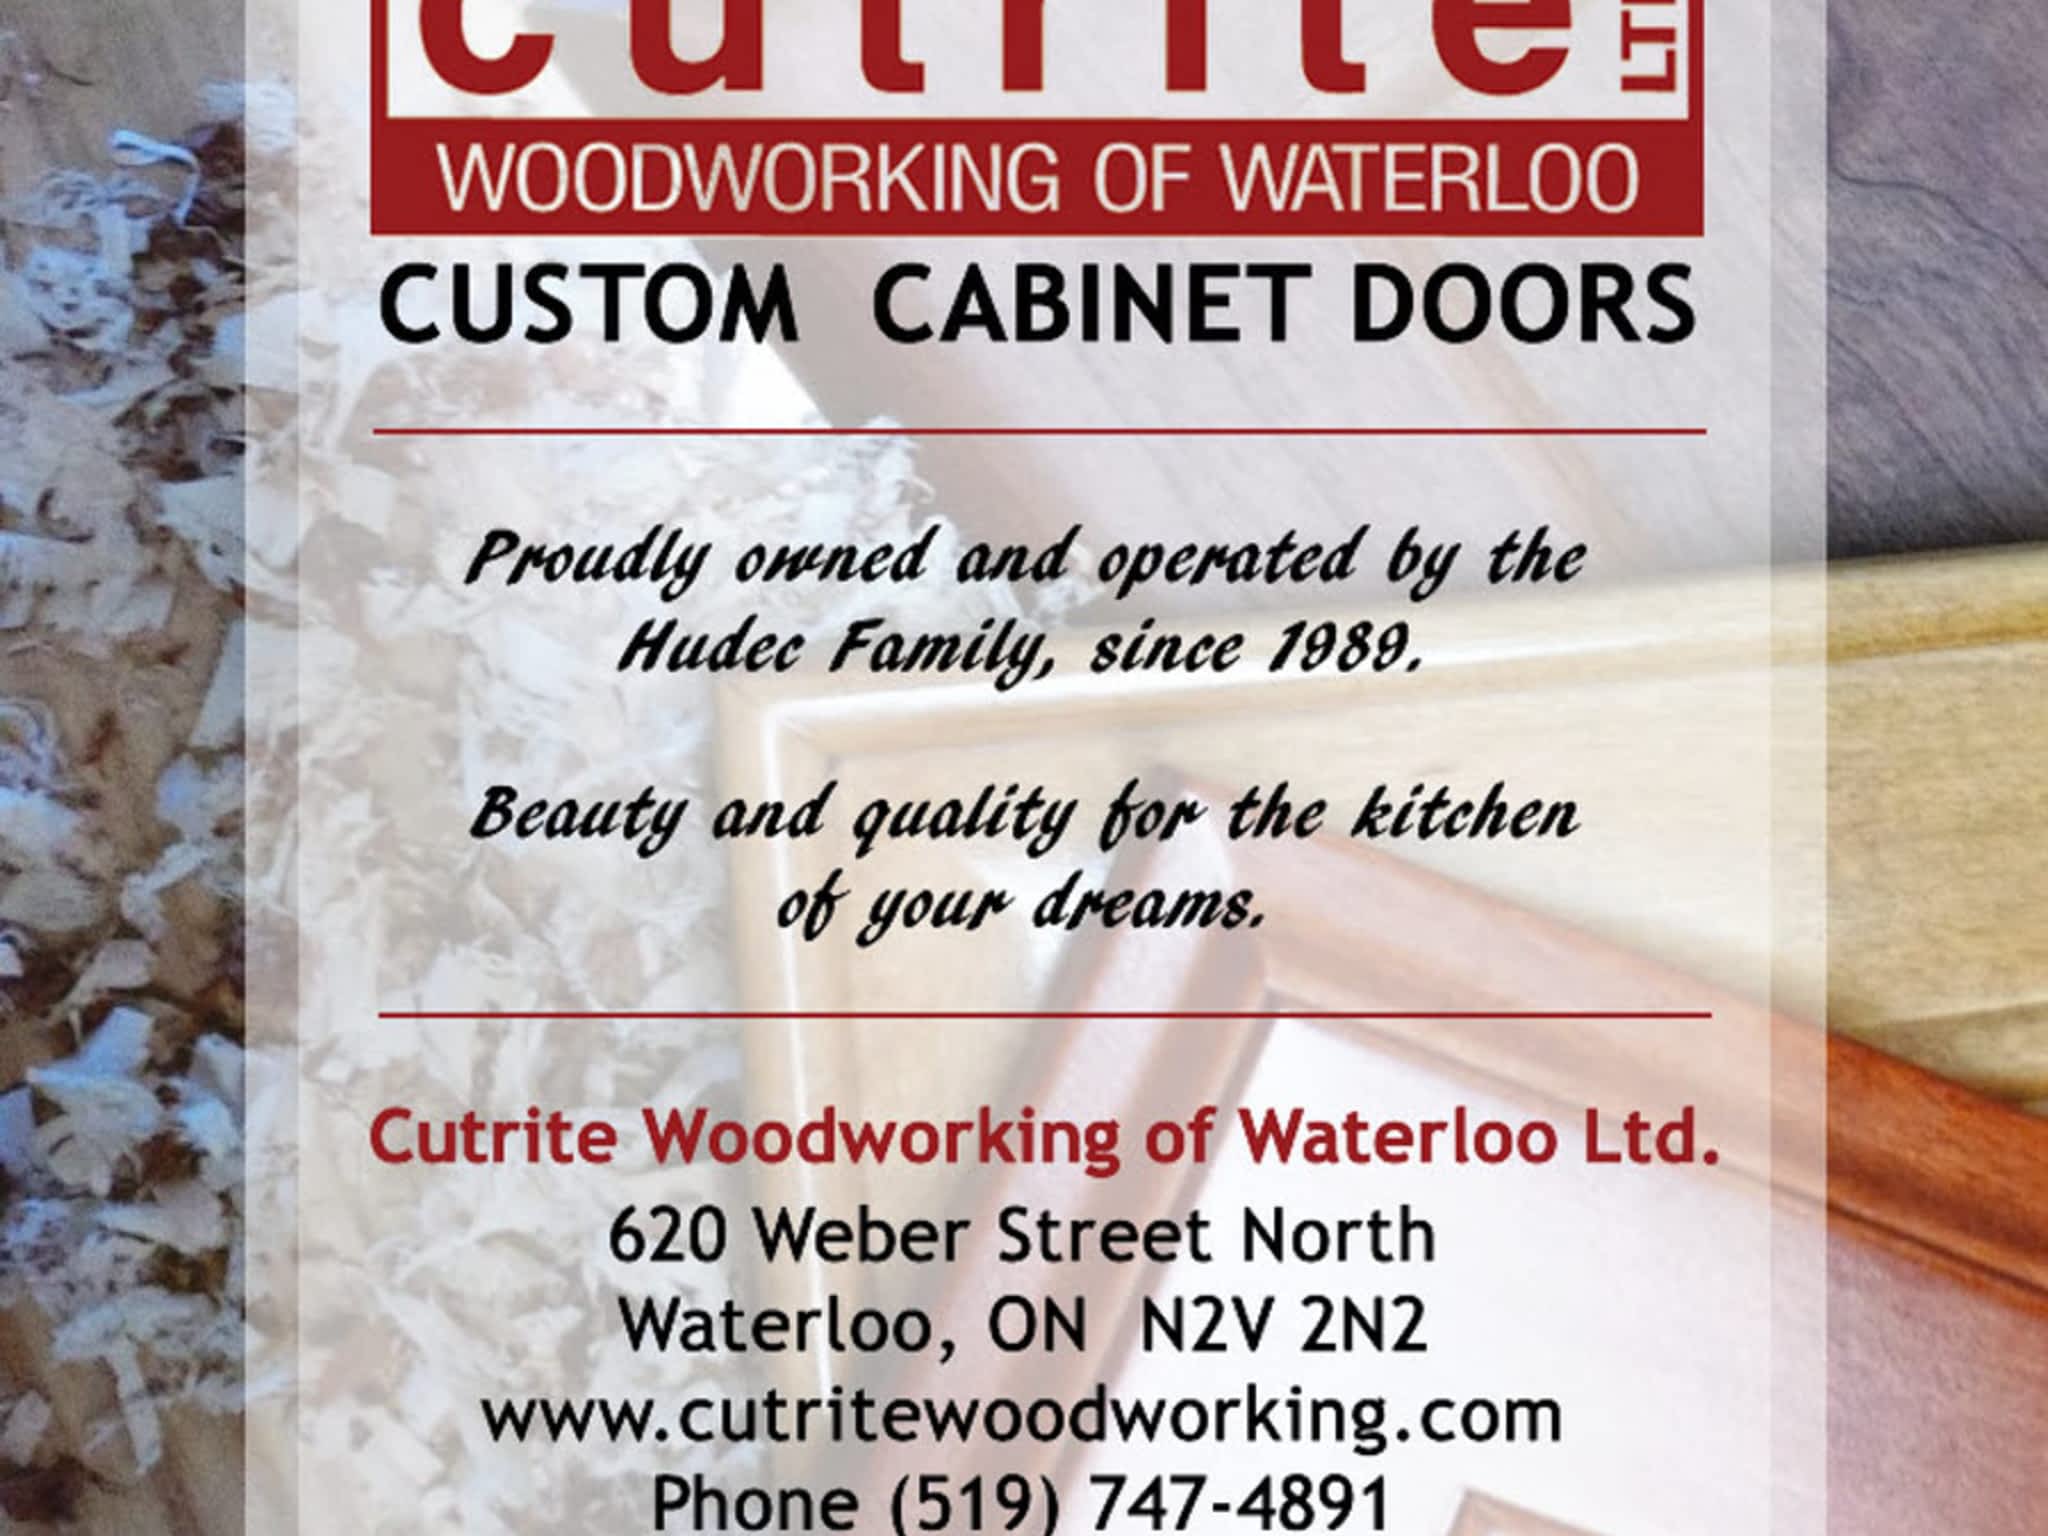 photo Cutrite Woodworking Waterloo Ltd